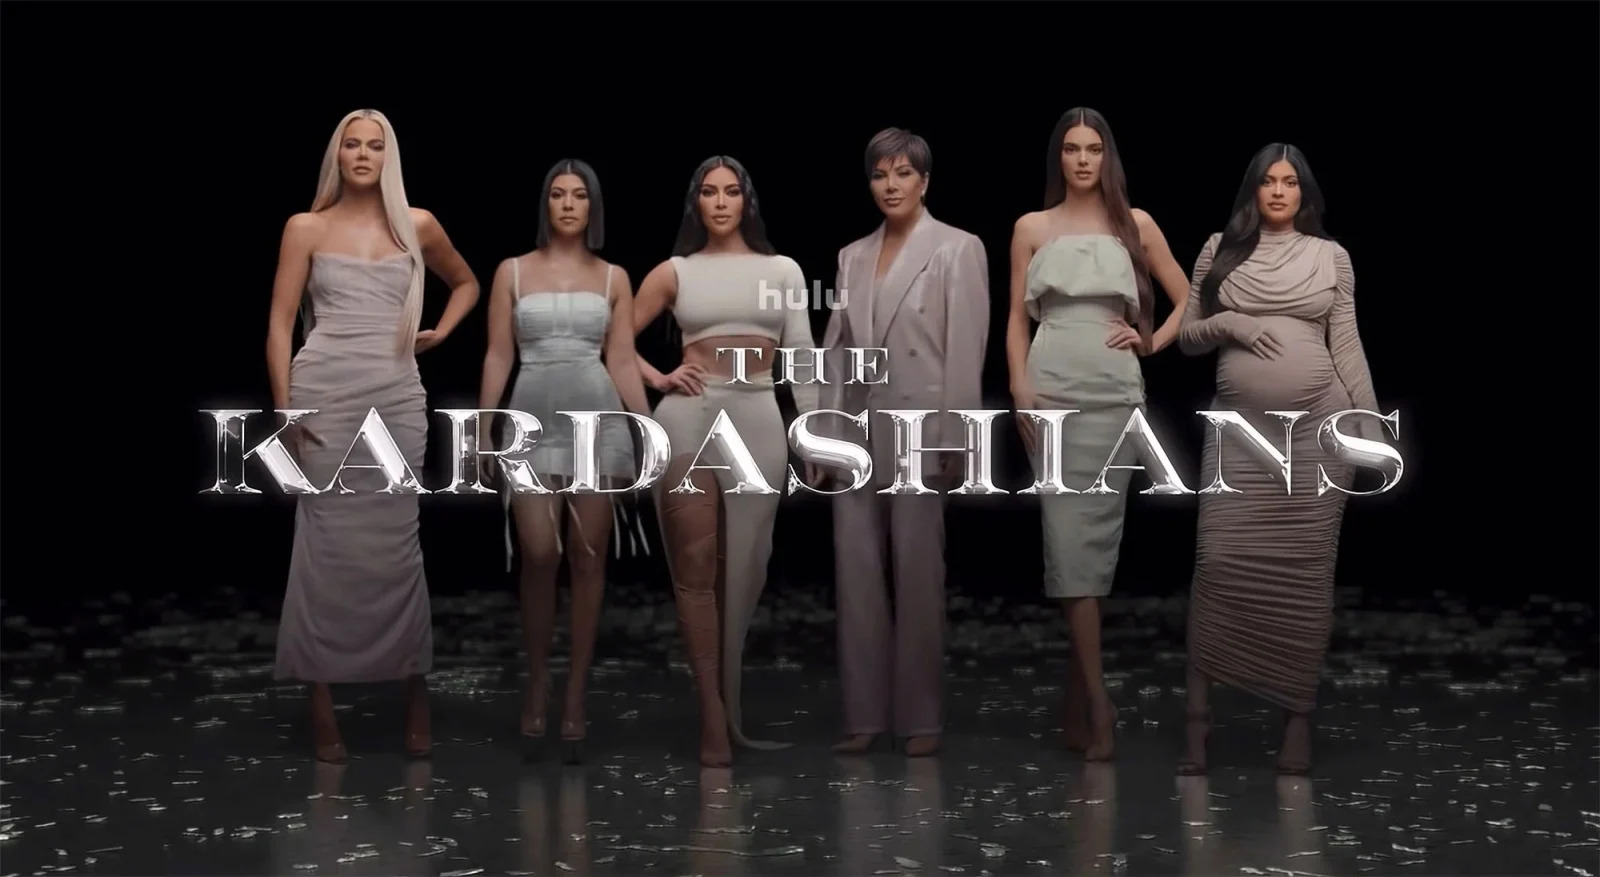 ‘The Kardashians’ Lands Biggest Premiere in Hulu History